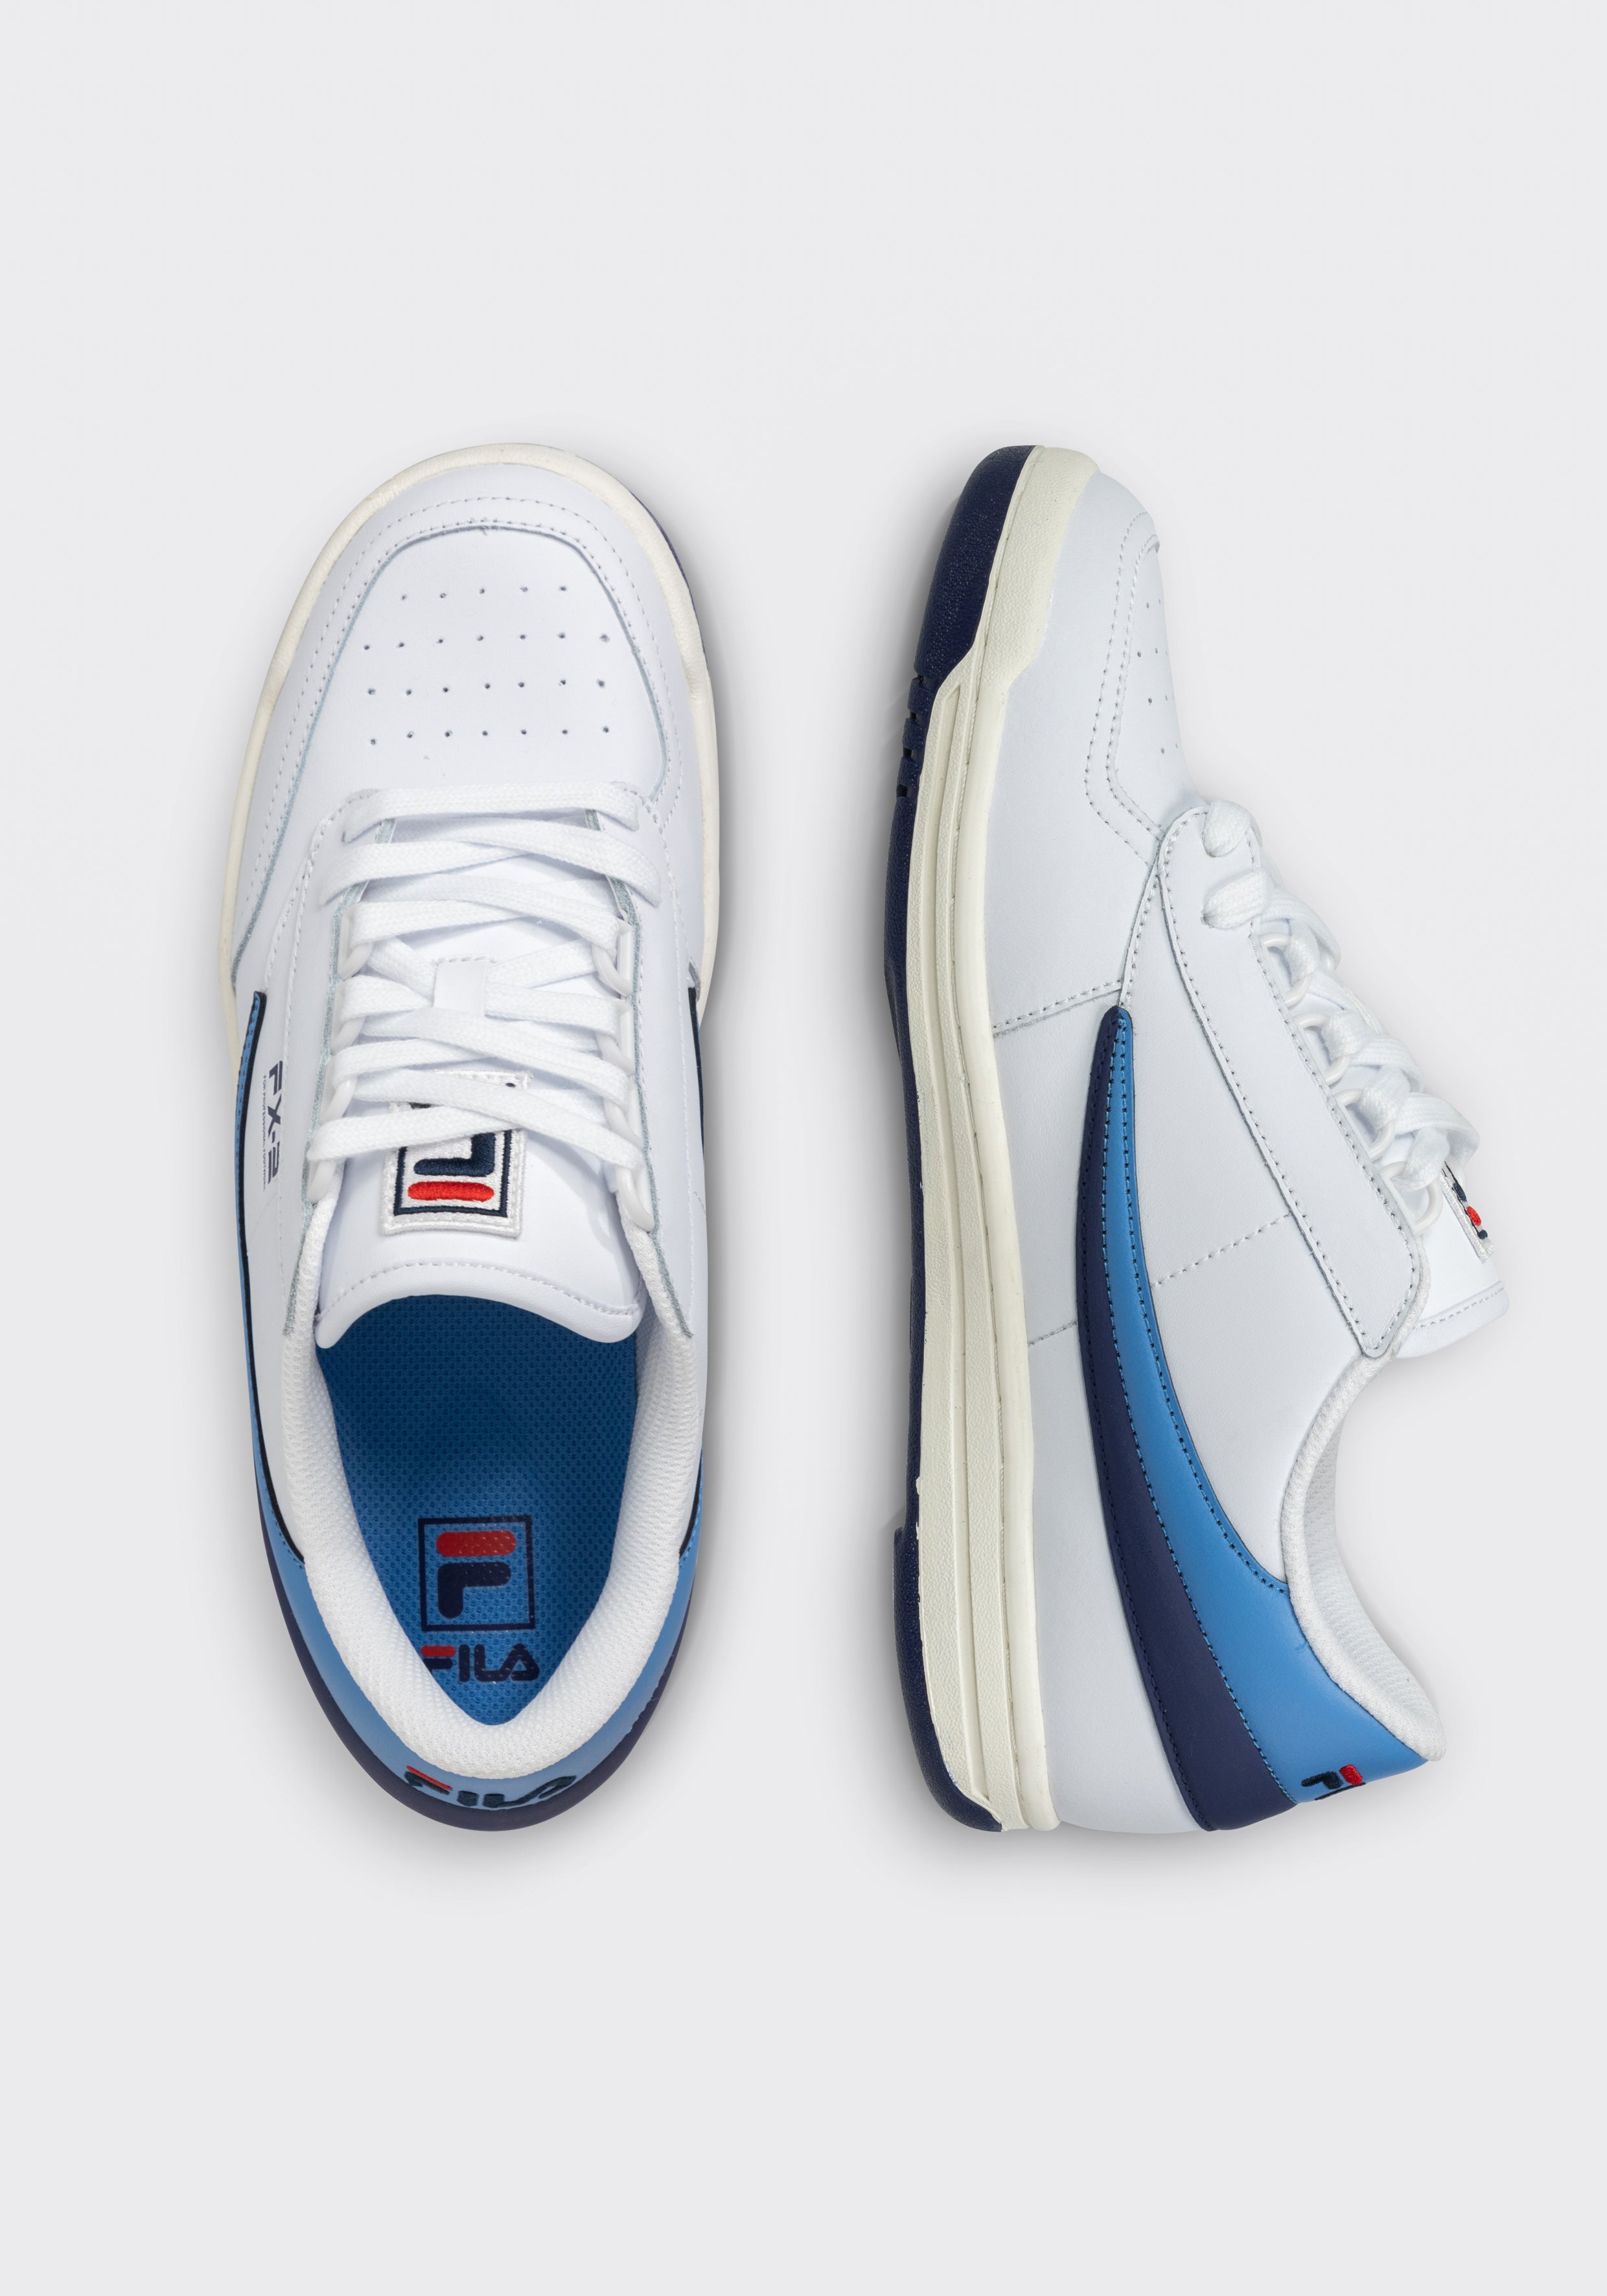 Original Tennis '83 in White-Lichen Blue Sneakers Fila   